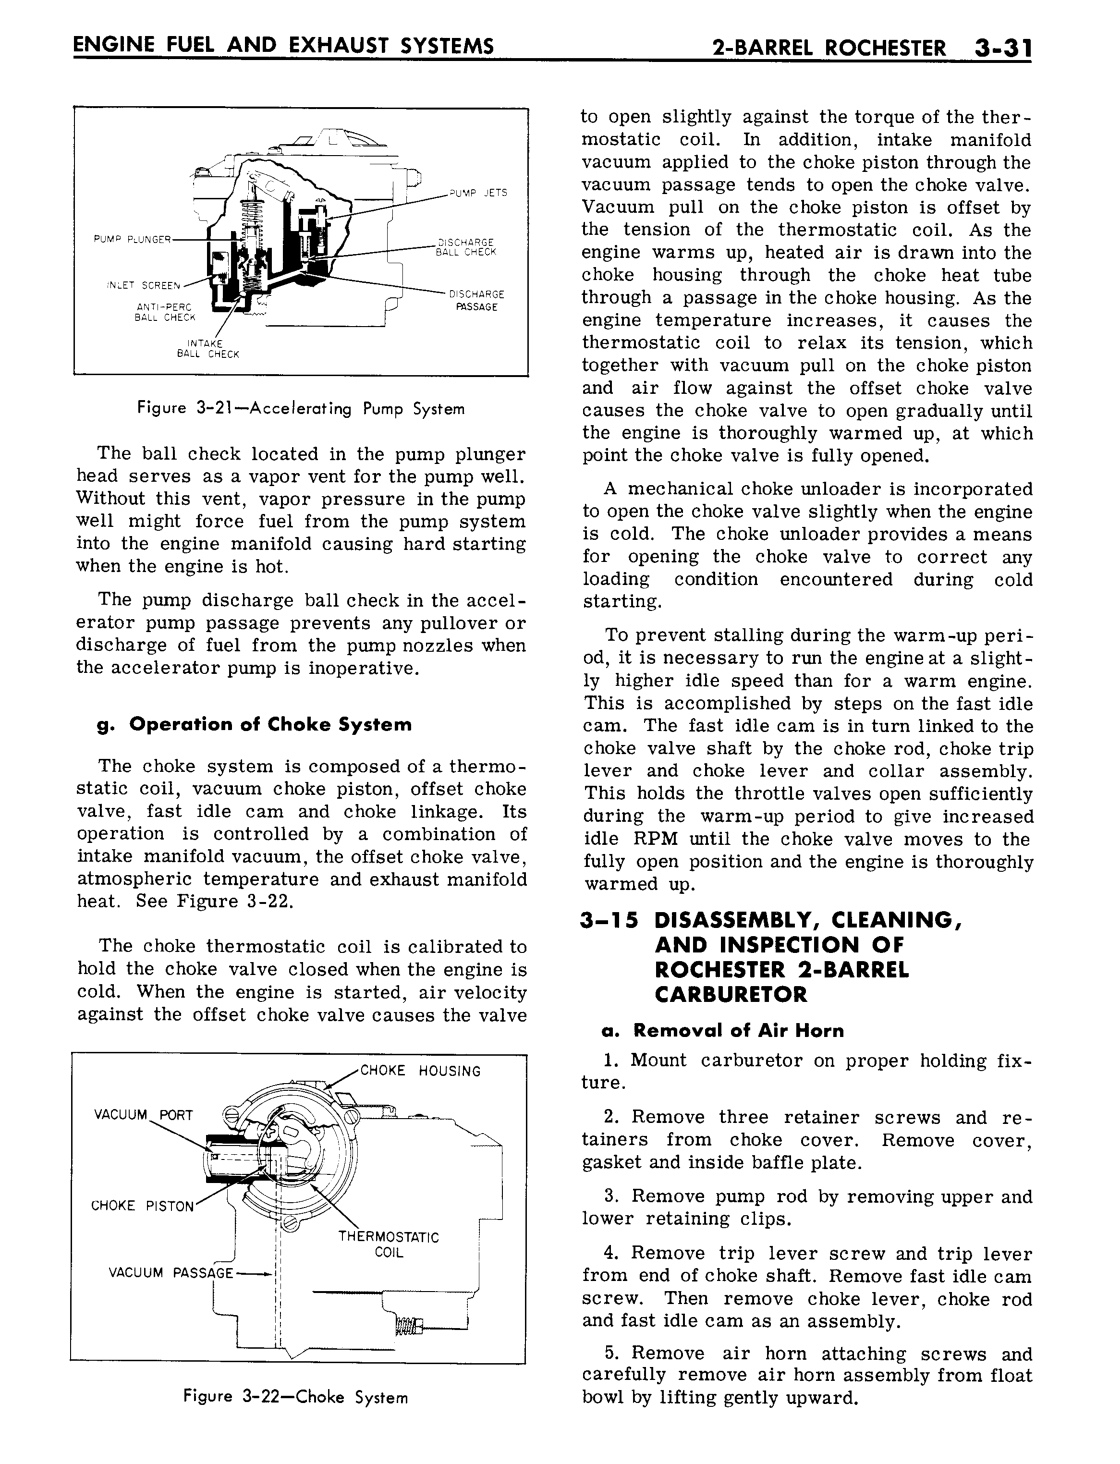 n_04 1961 Buick Shop Manual - Engine Fuel & Exhaust-031-031.jpg